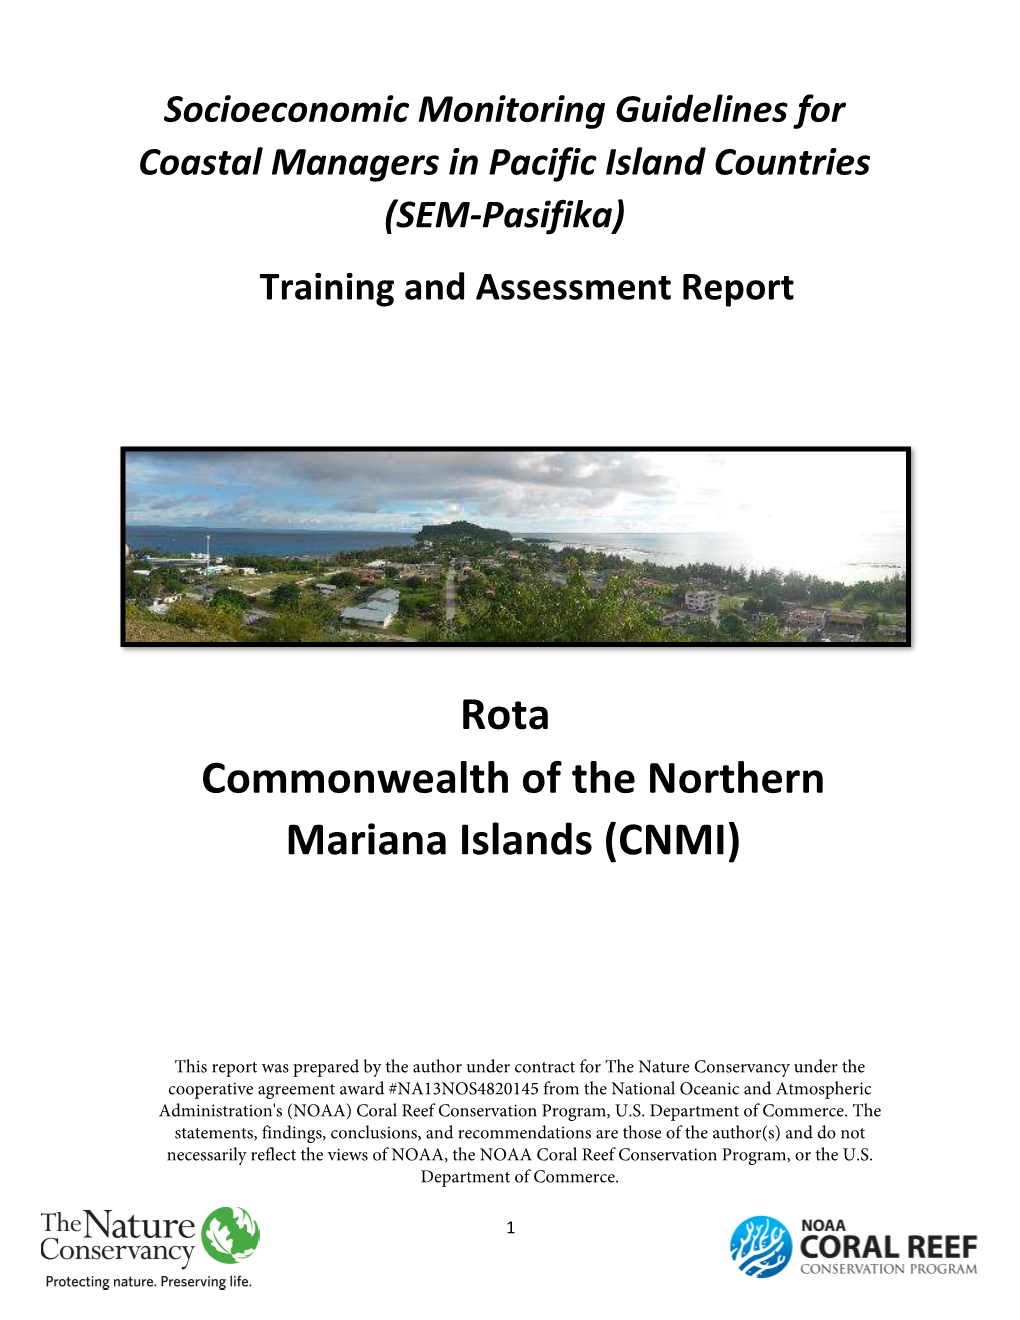 Rota Commonwealth of the Northern Mariana Islands (CNMI)